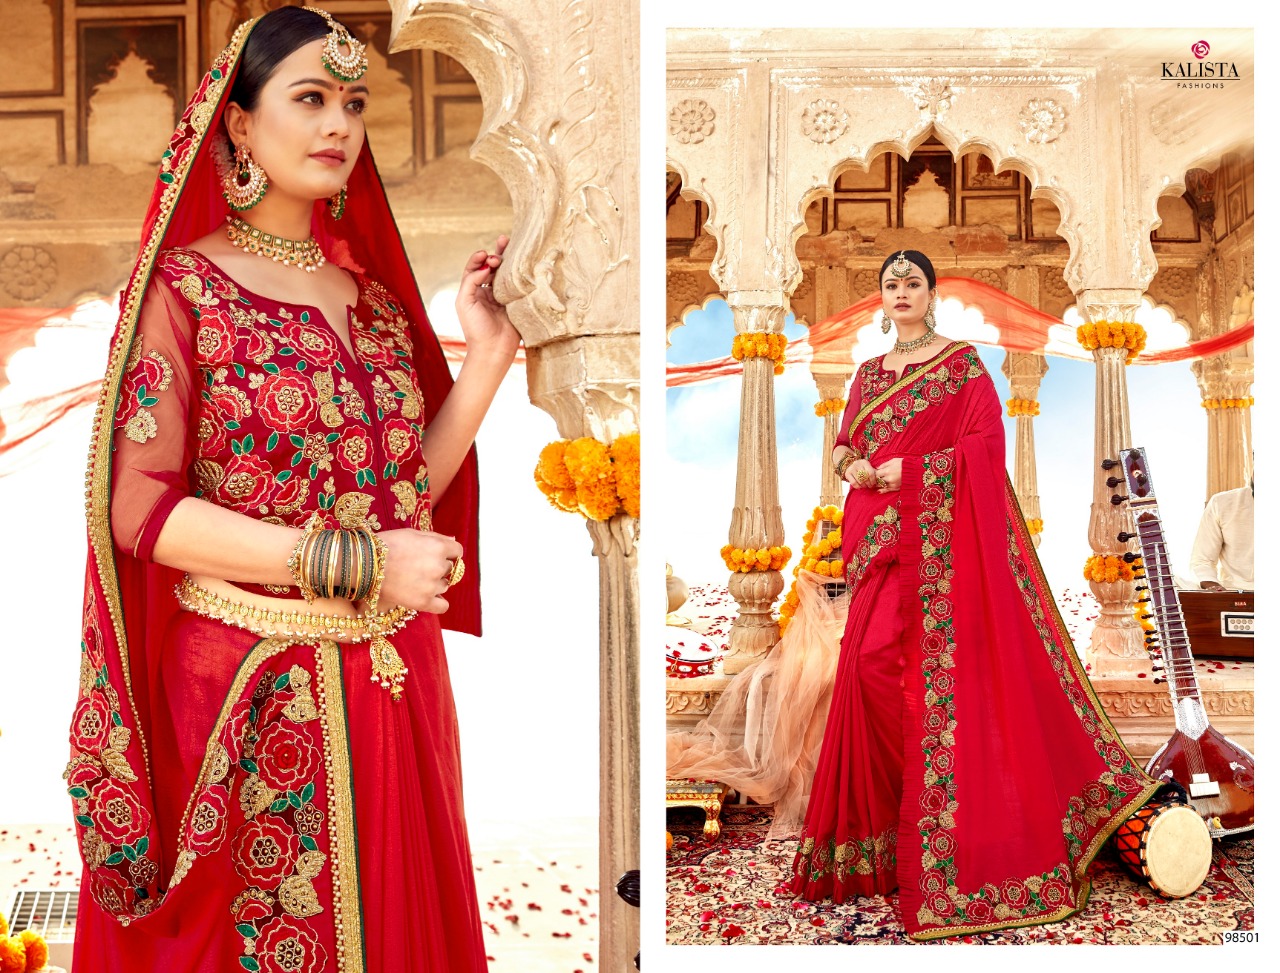 Kalista Fashions Rani Sahiba 98501